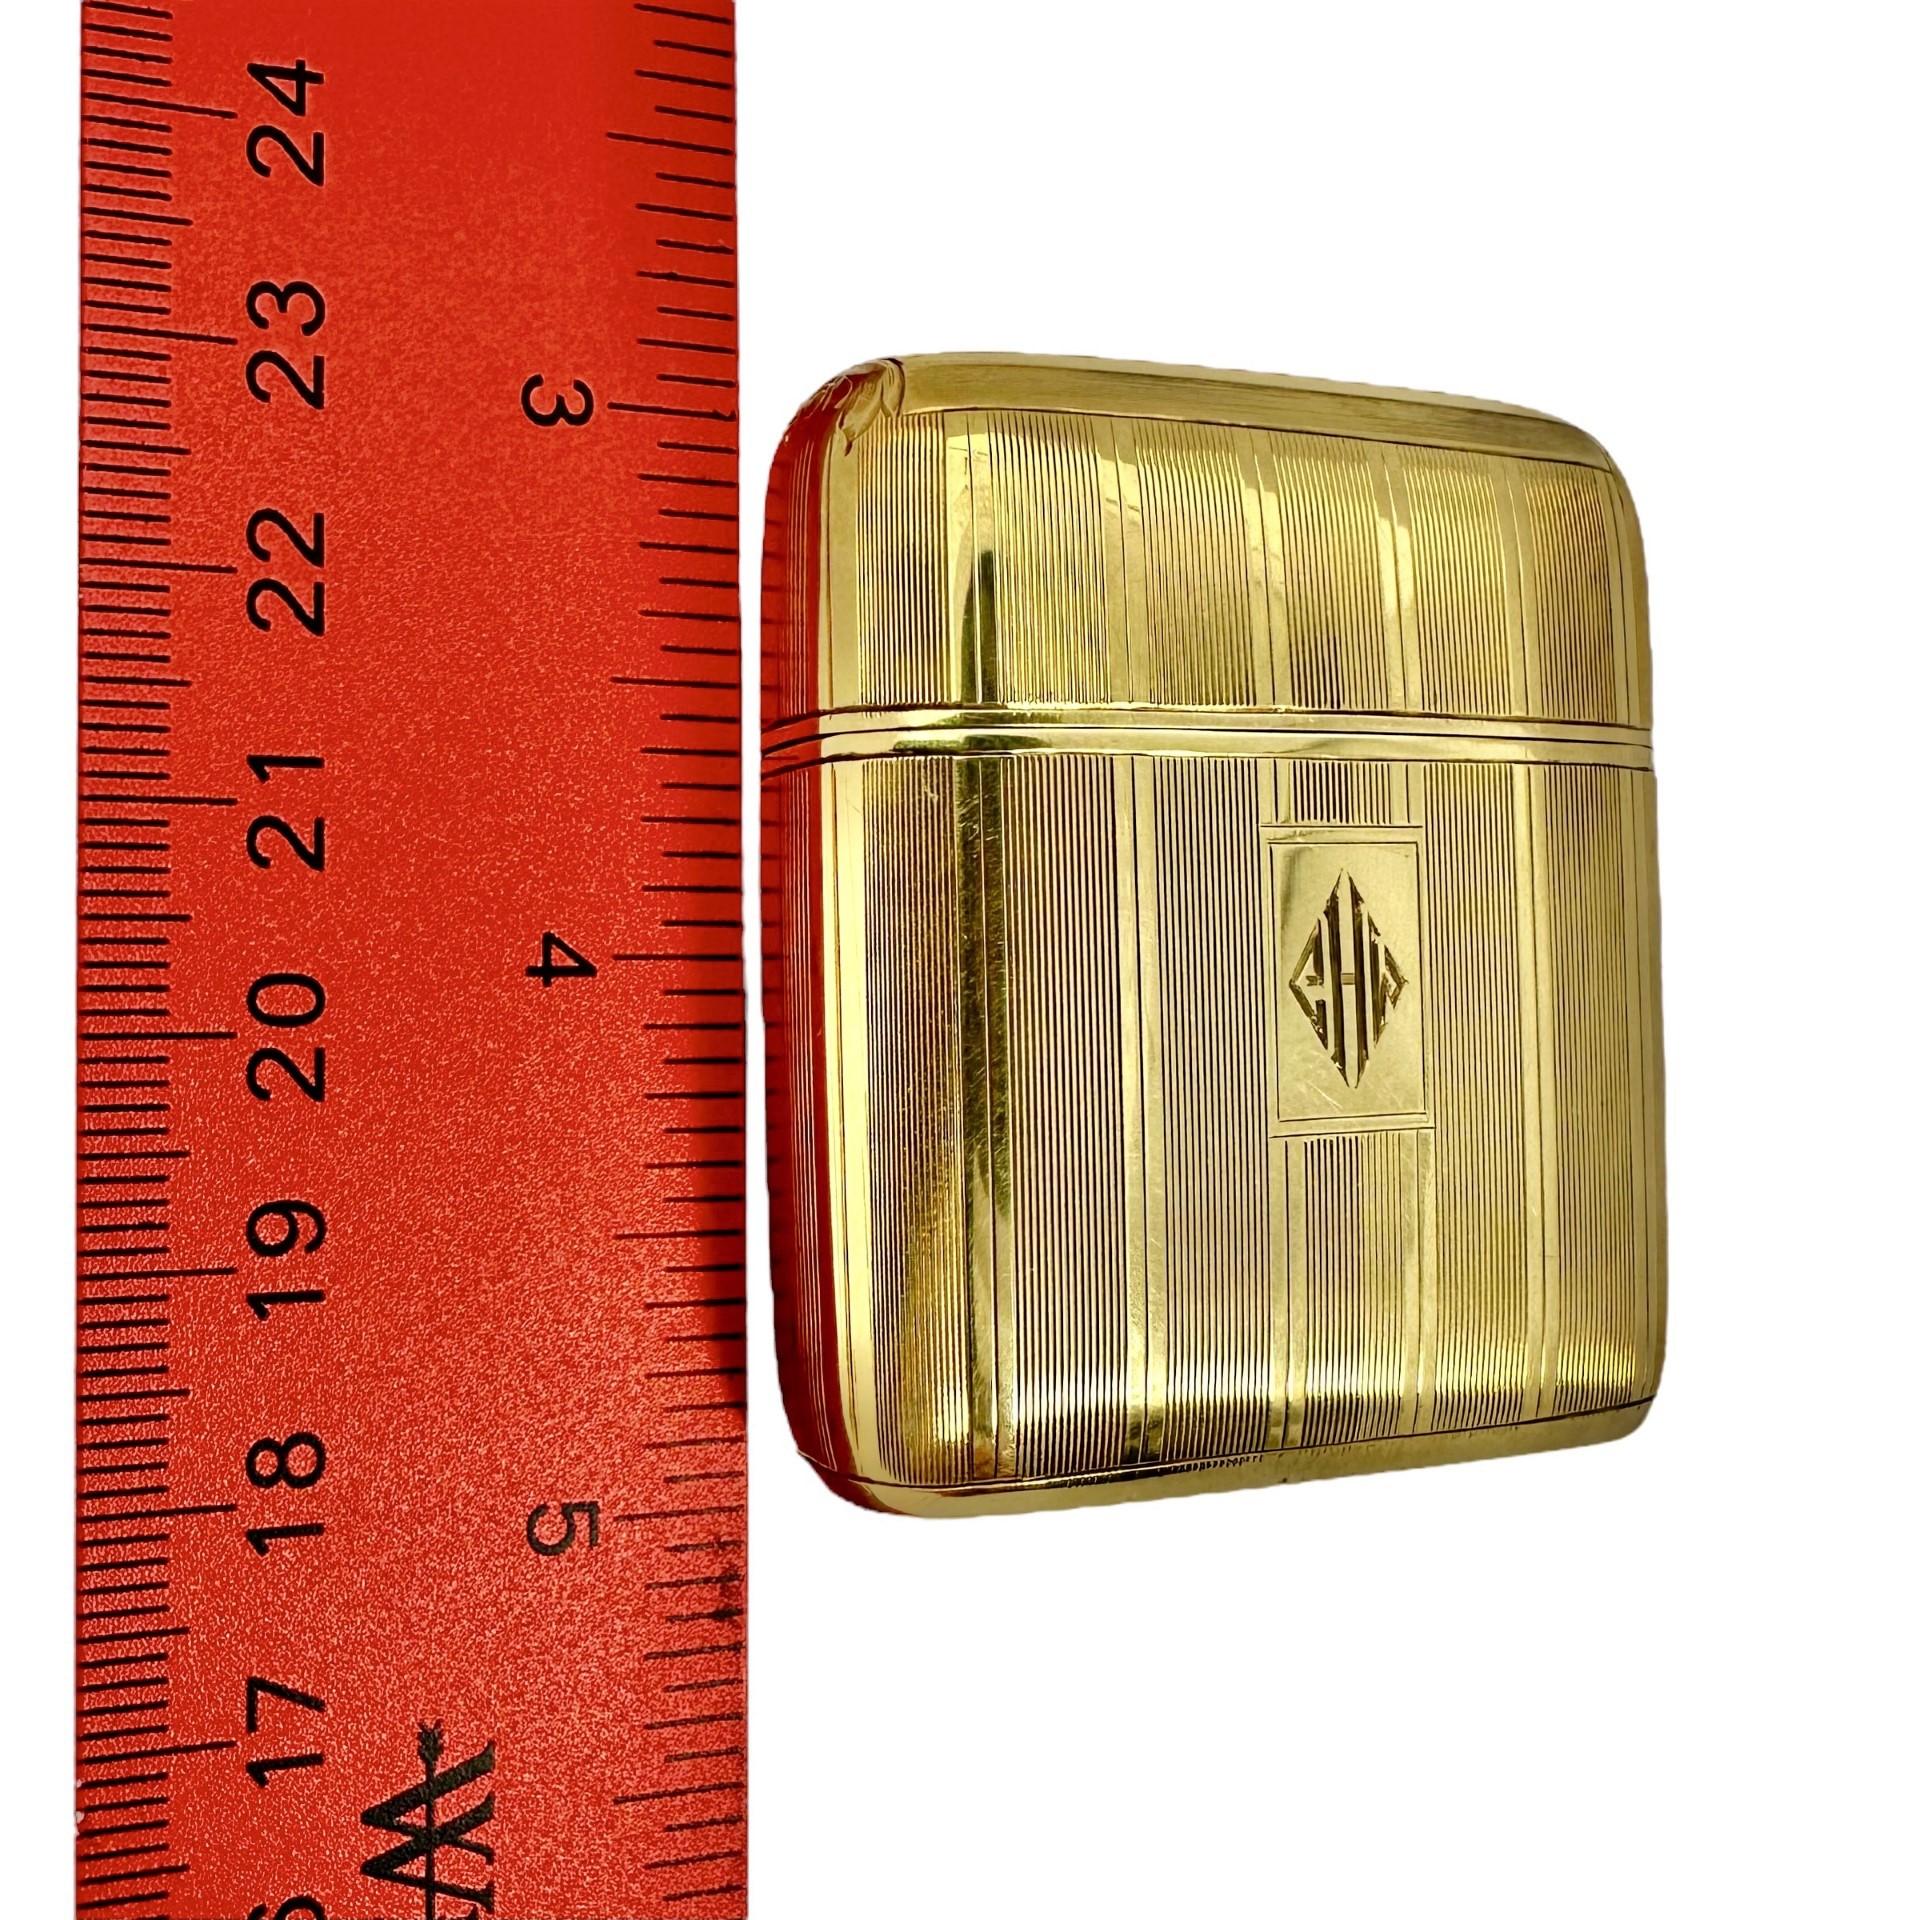  Antique Tiffany & Co 18k Gold Travel Razor & Case with Original Gillette Blades For Sale 6